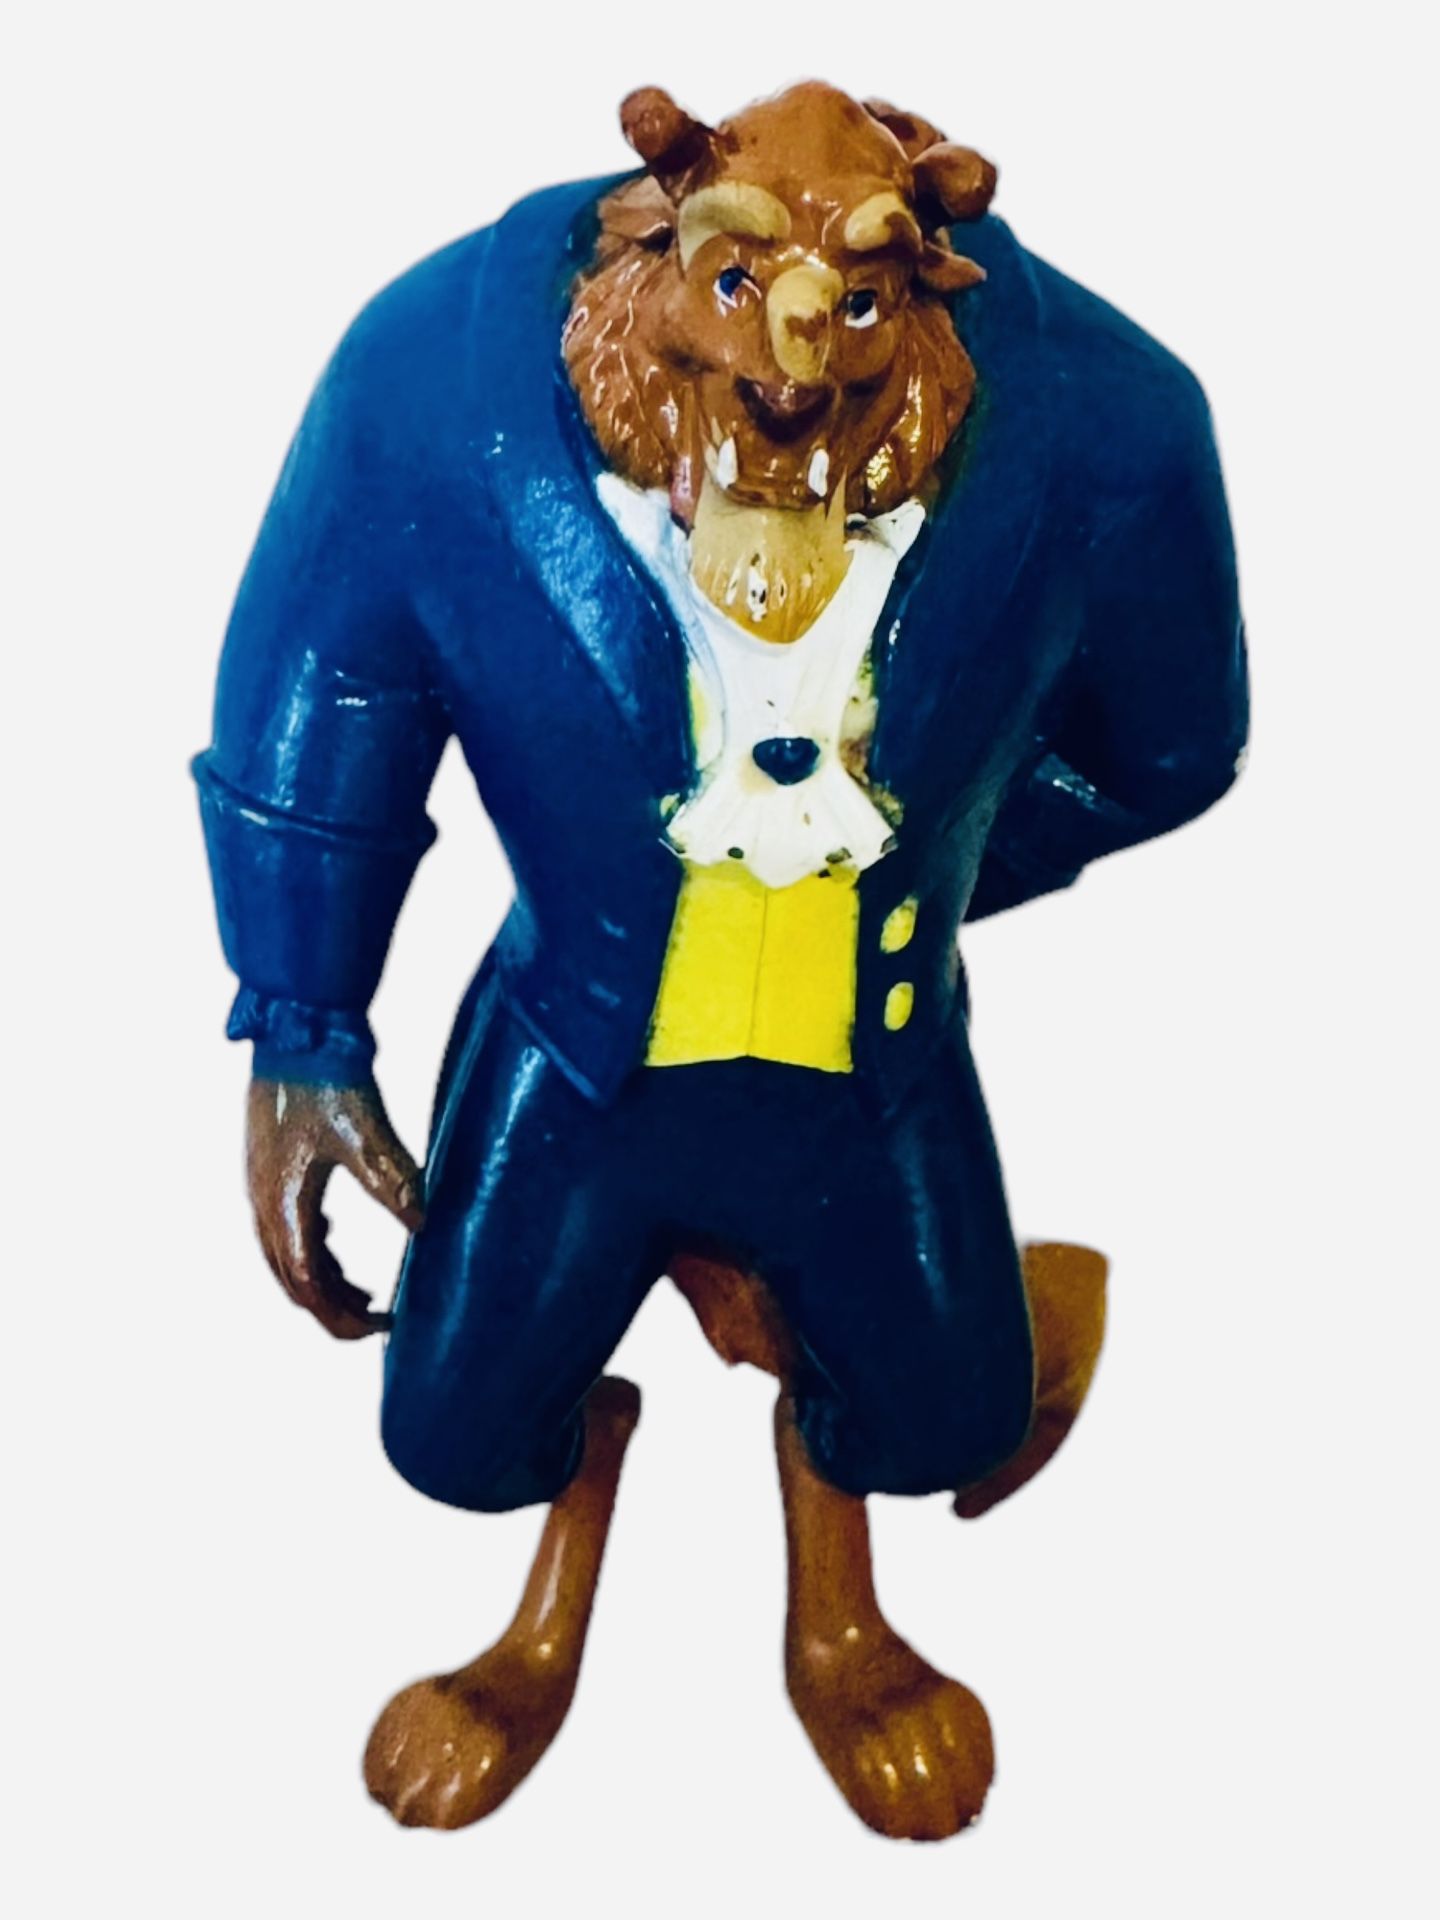 The Beast - Disney Beauty and the Beast PVC Figure 3"